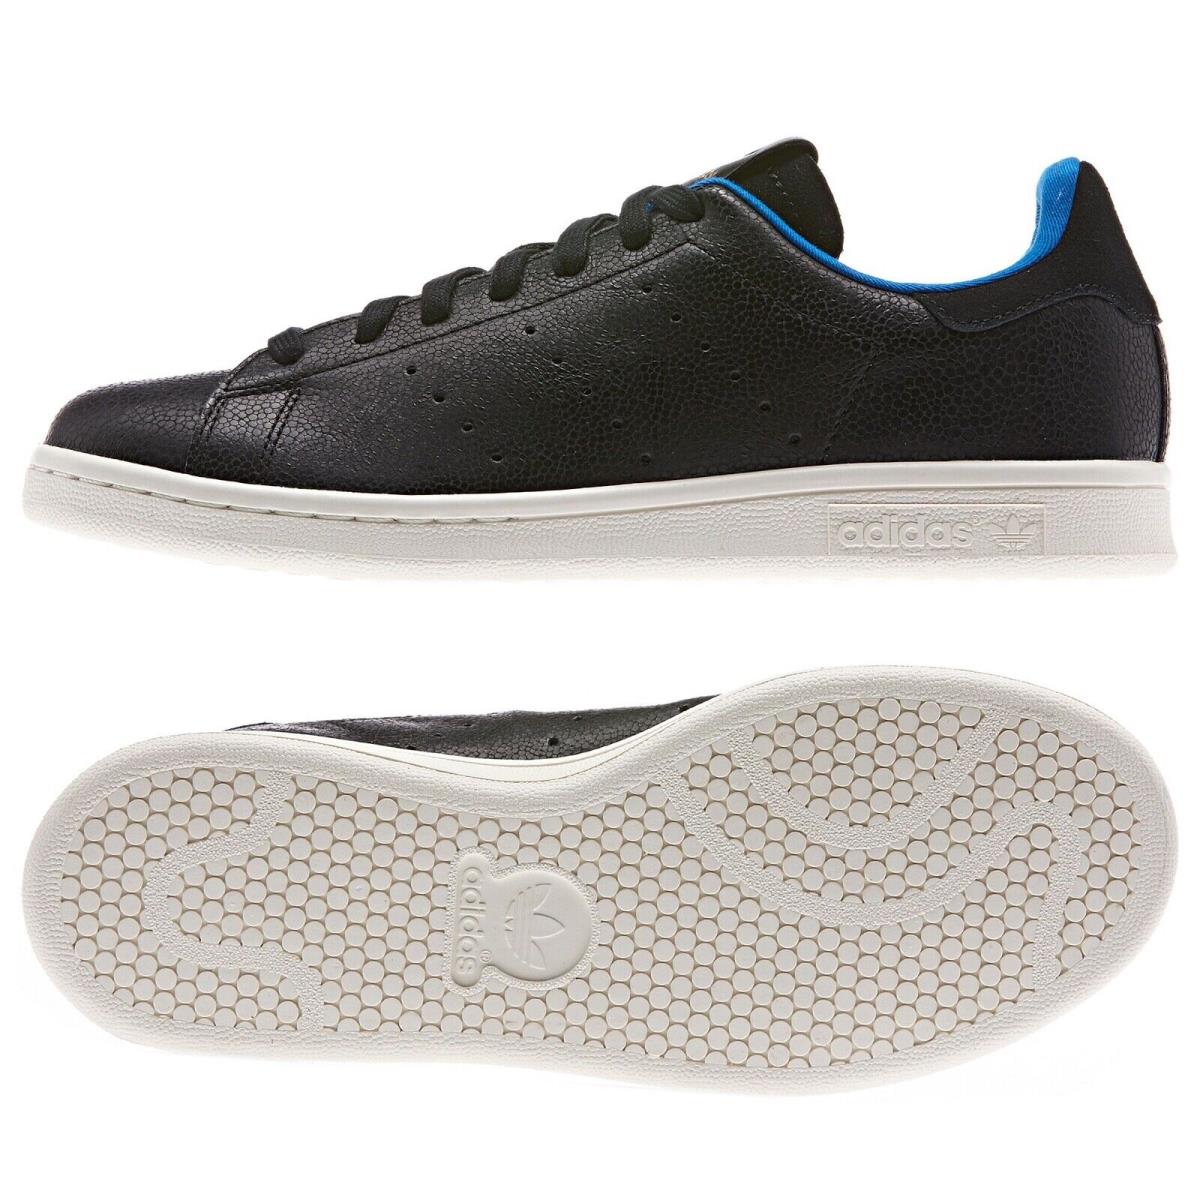 Adidas Originals Stan Smith Shark W Black Leather Sharkskin D65899 Women`s Shoes - Black/Black/Bluebird